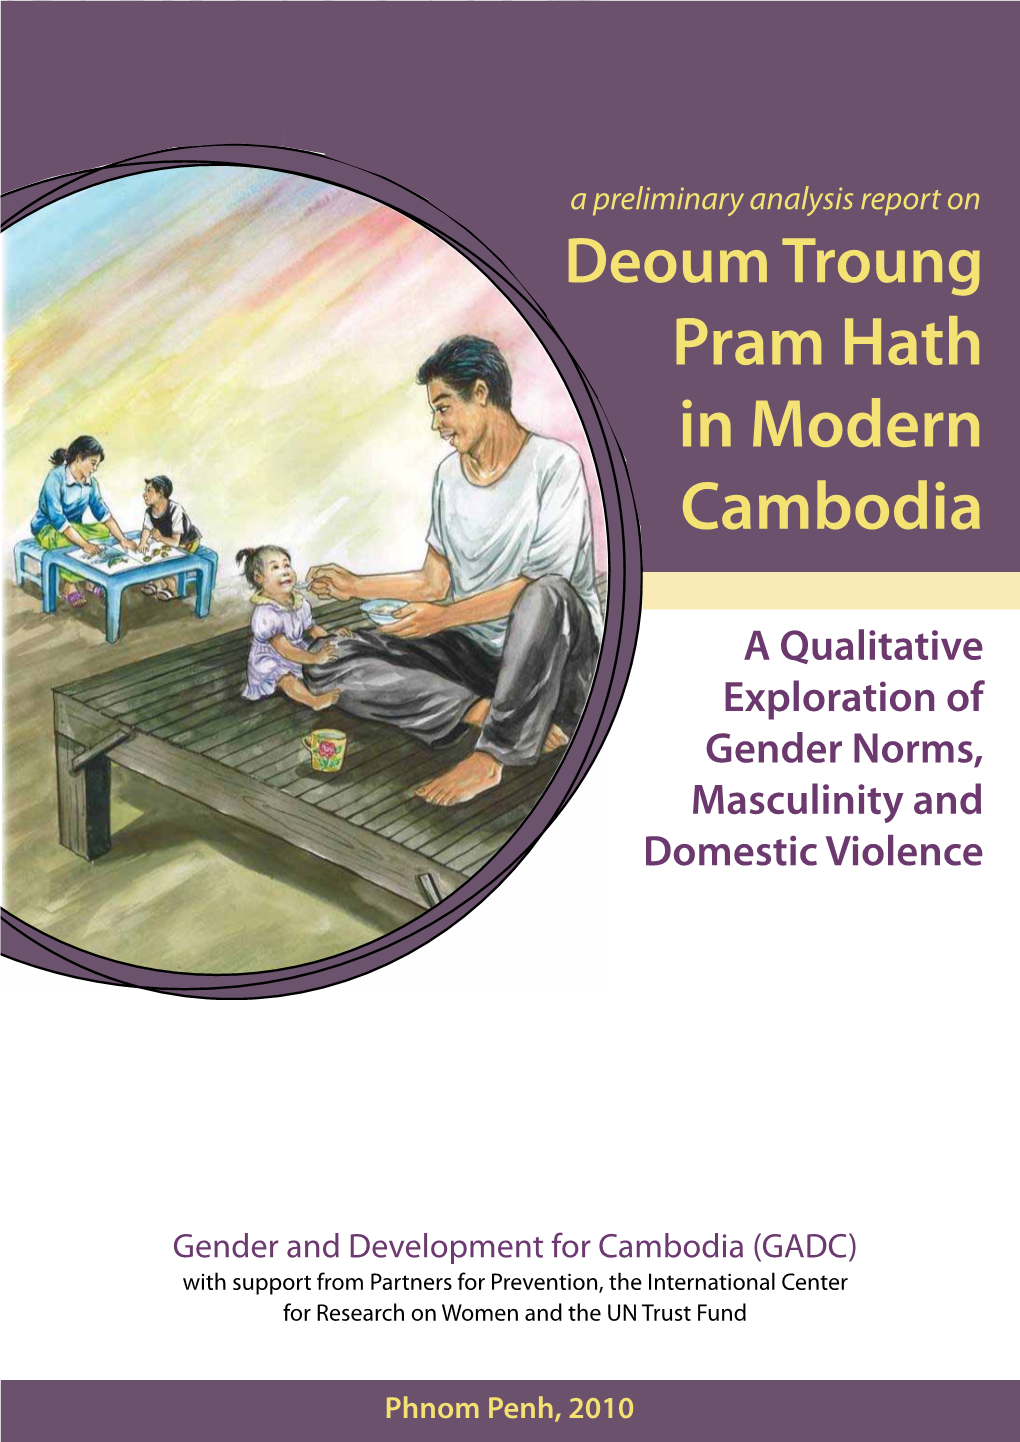 Pram Hath in Modern Cambodia